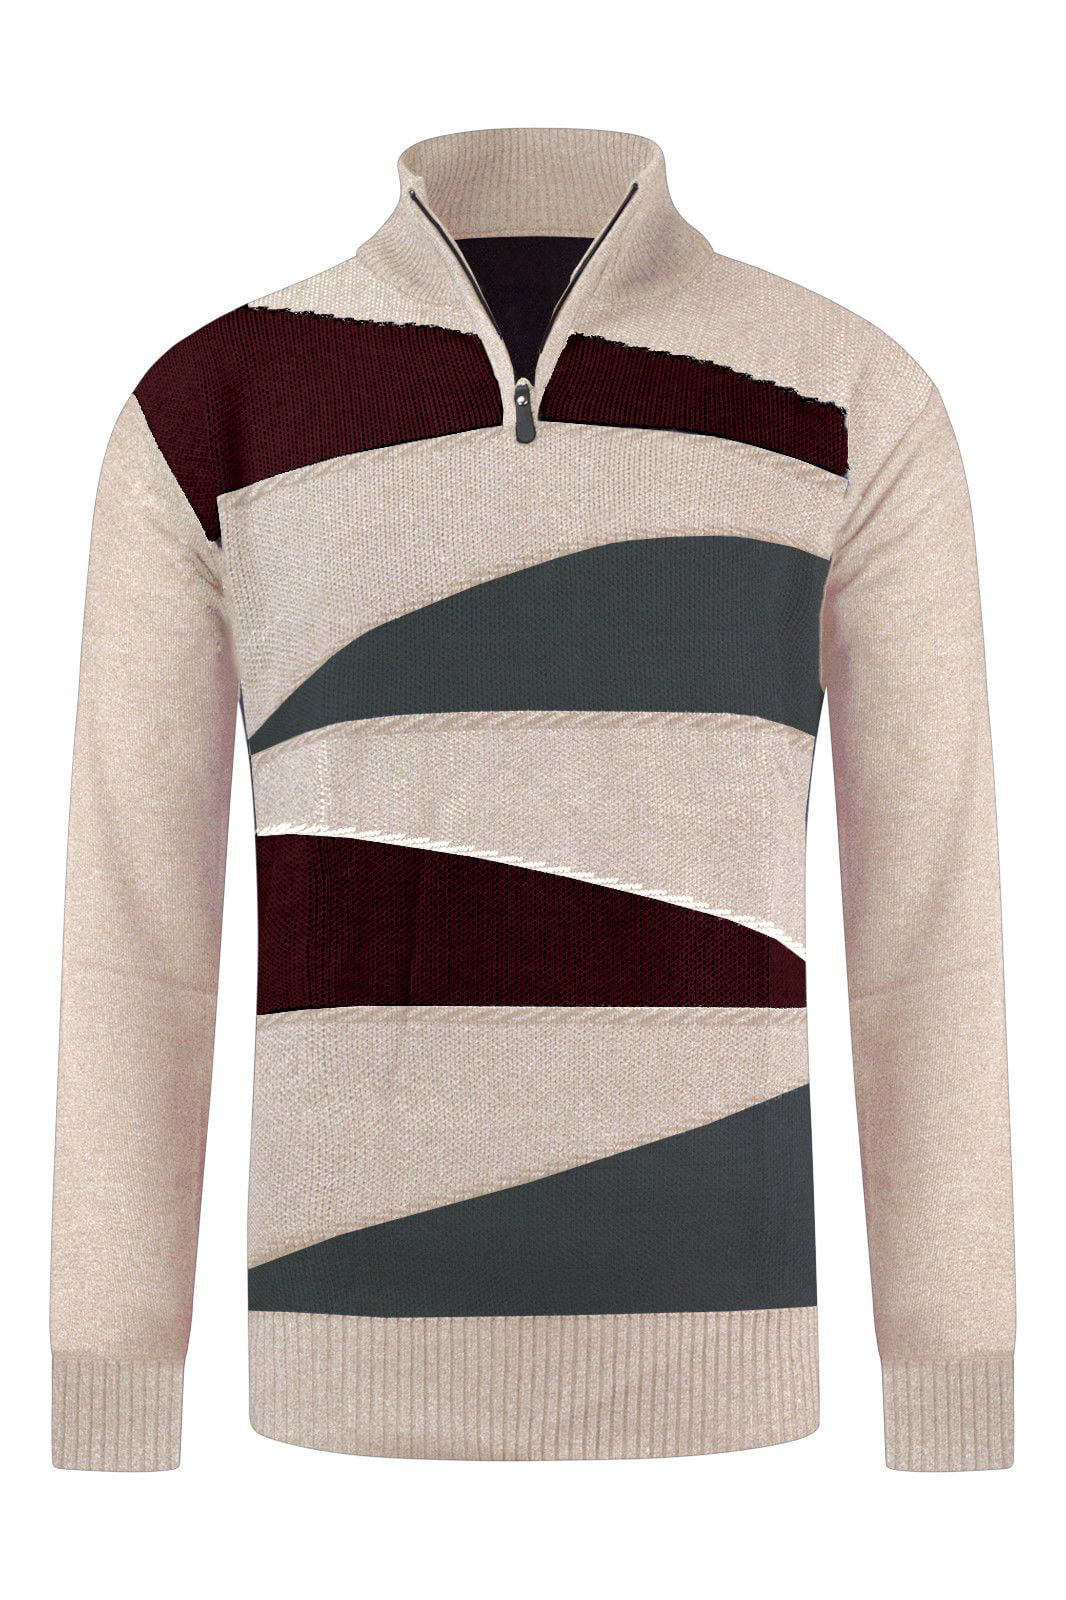 Trending Apparel - New Men Henley Sweater Zipper Pullover - Walmart.com ...